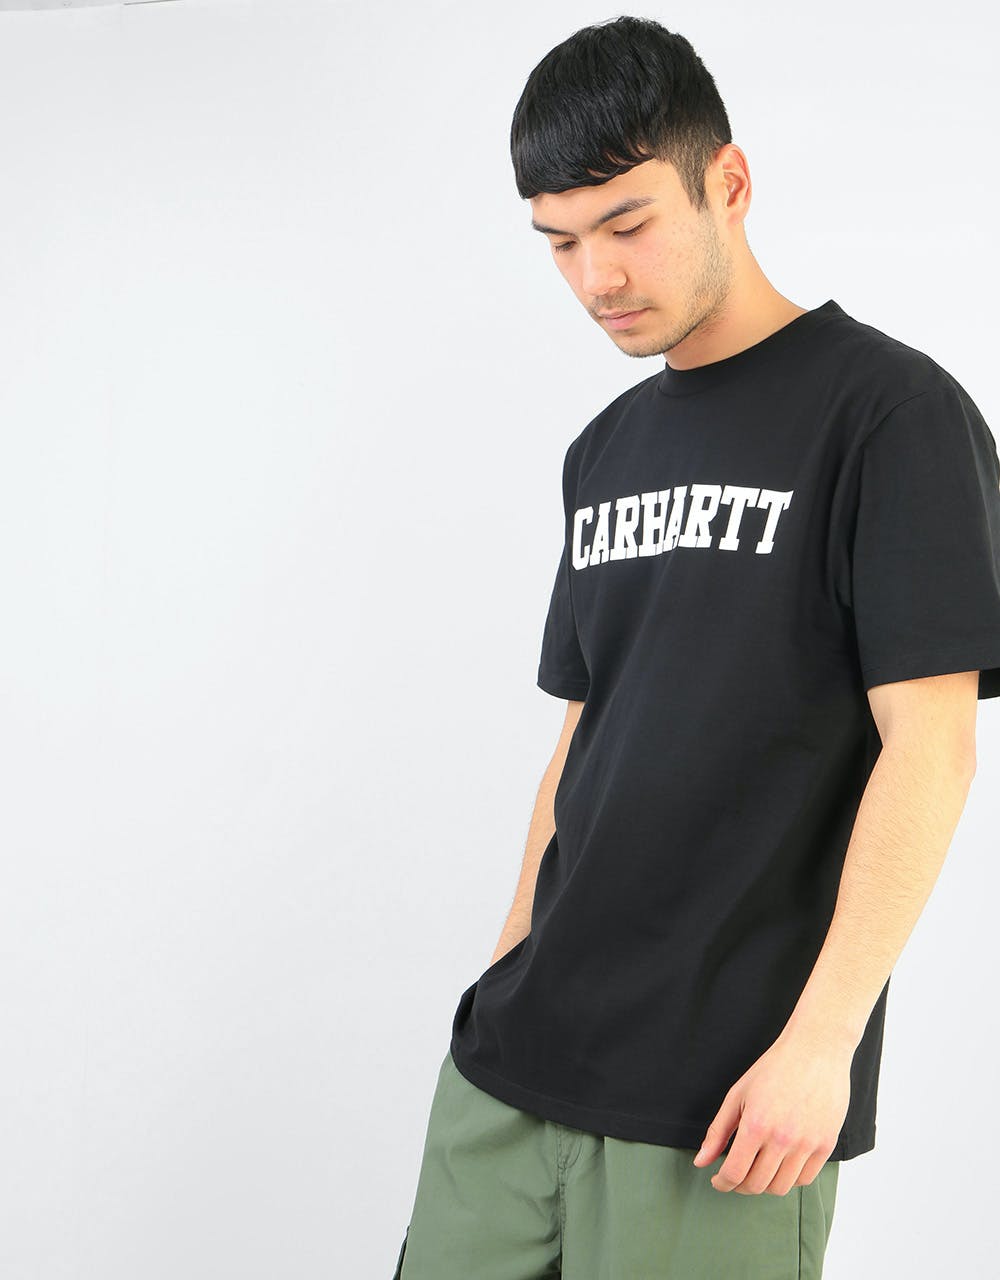 Carhartt WIP S/S College T-Shirt - Black/White